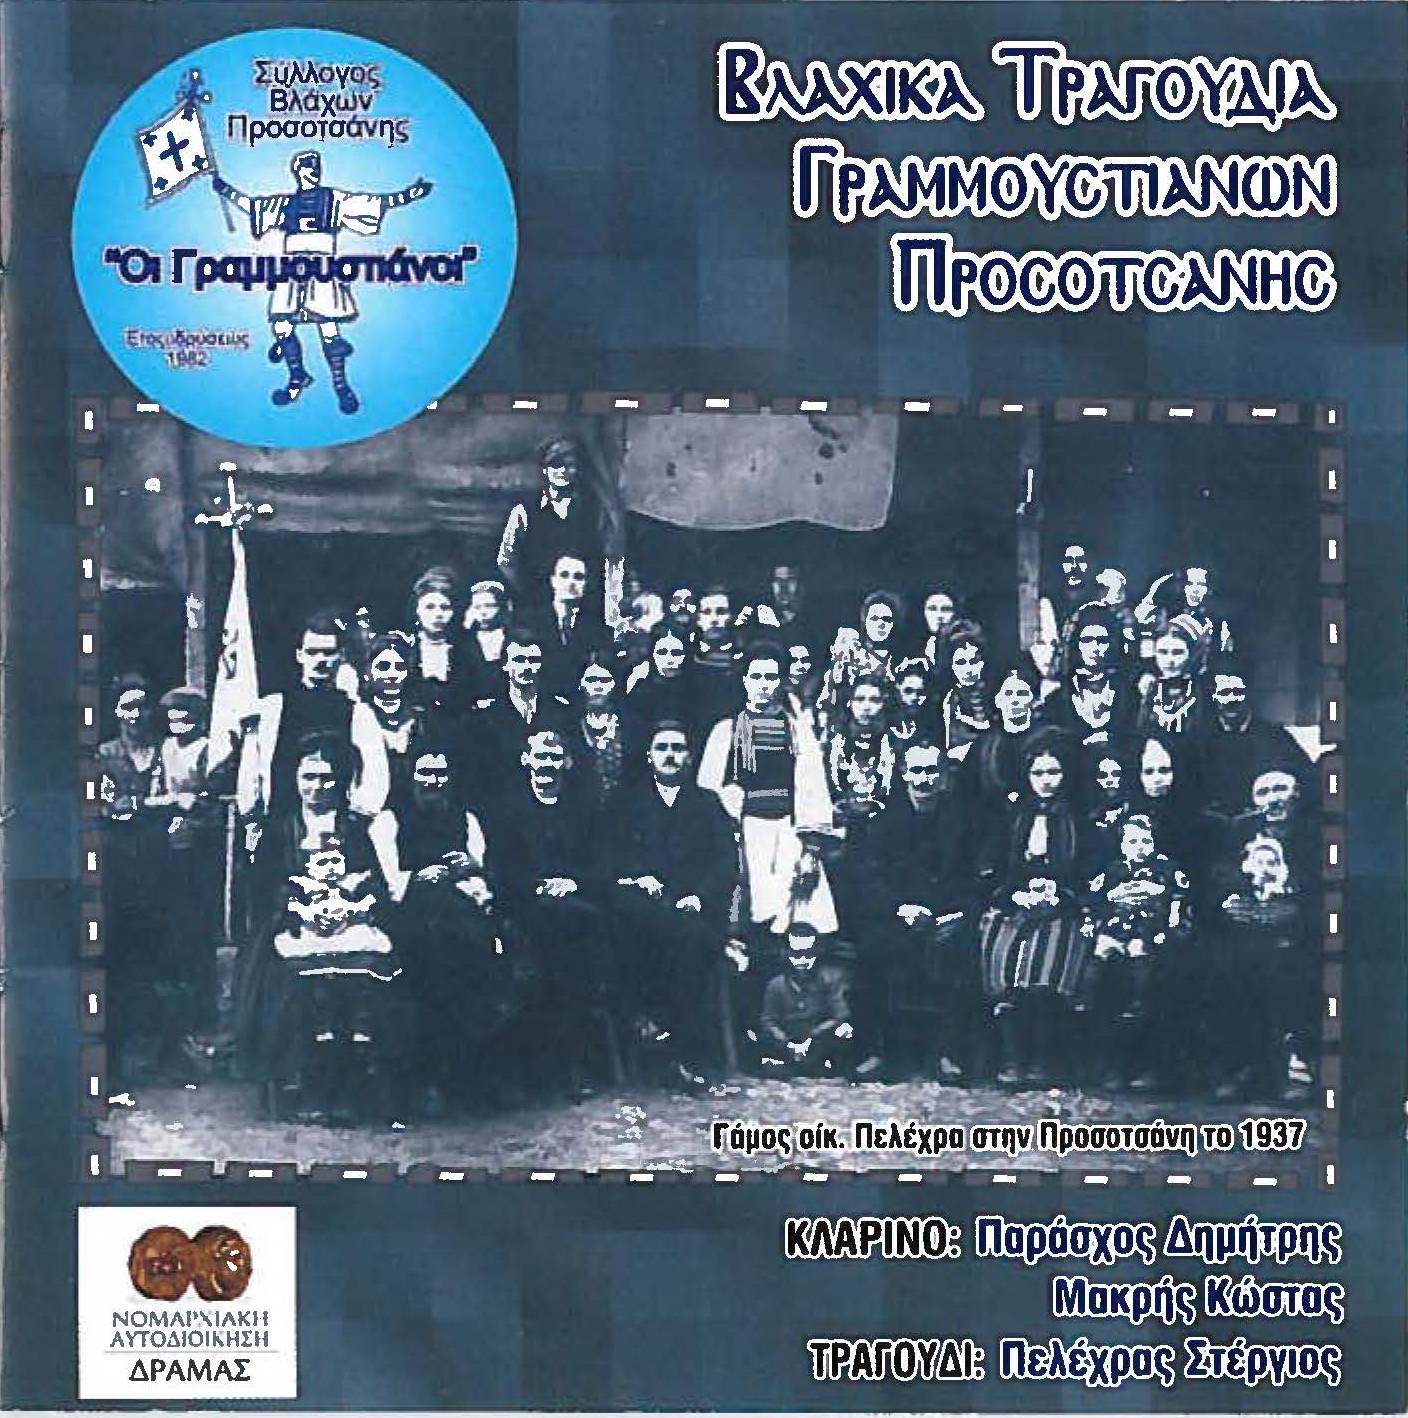 VLACH SONGS OF THE ASSOCIATION GRAMMOUSTIANI OF PROSOTSANI 